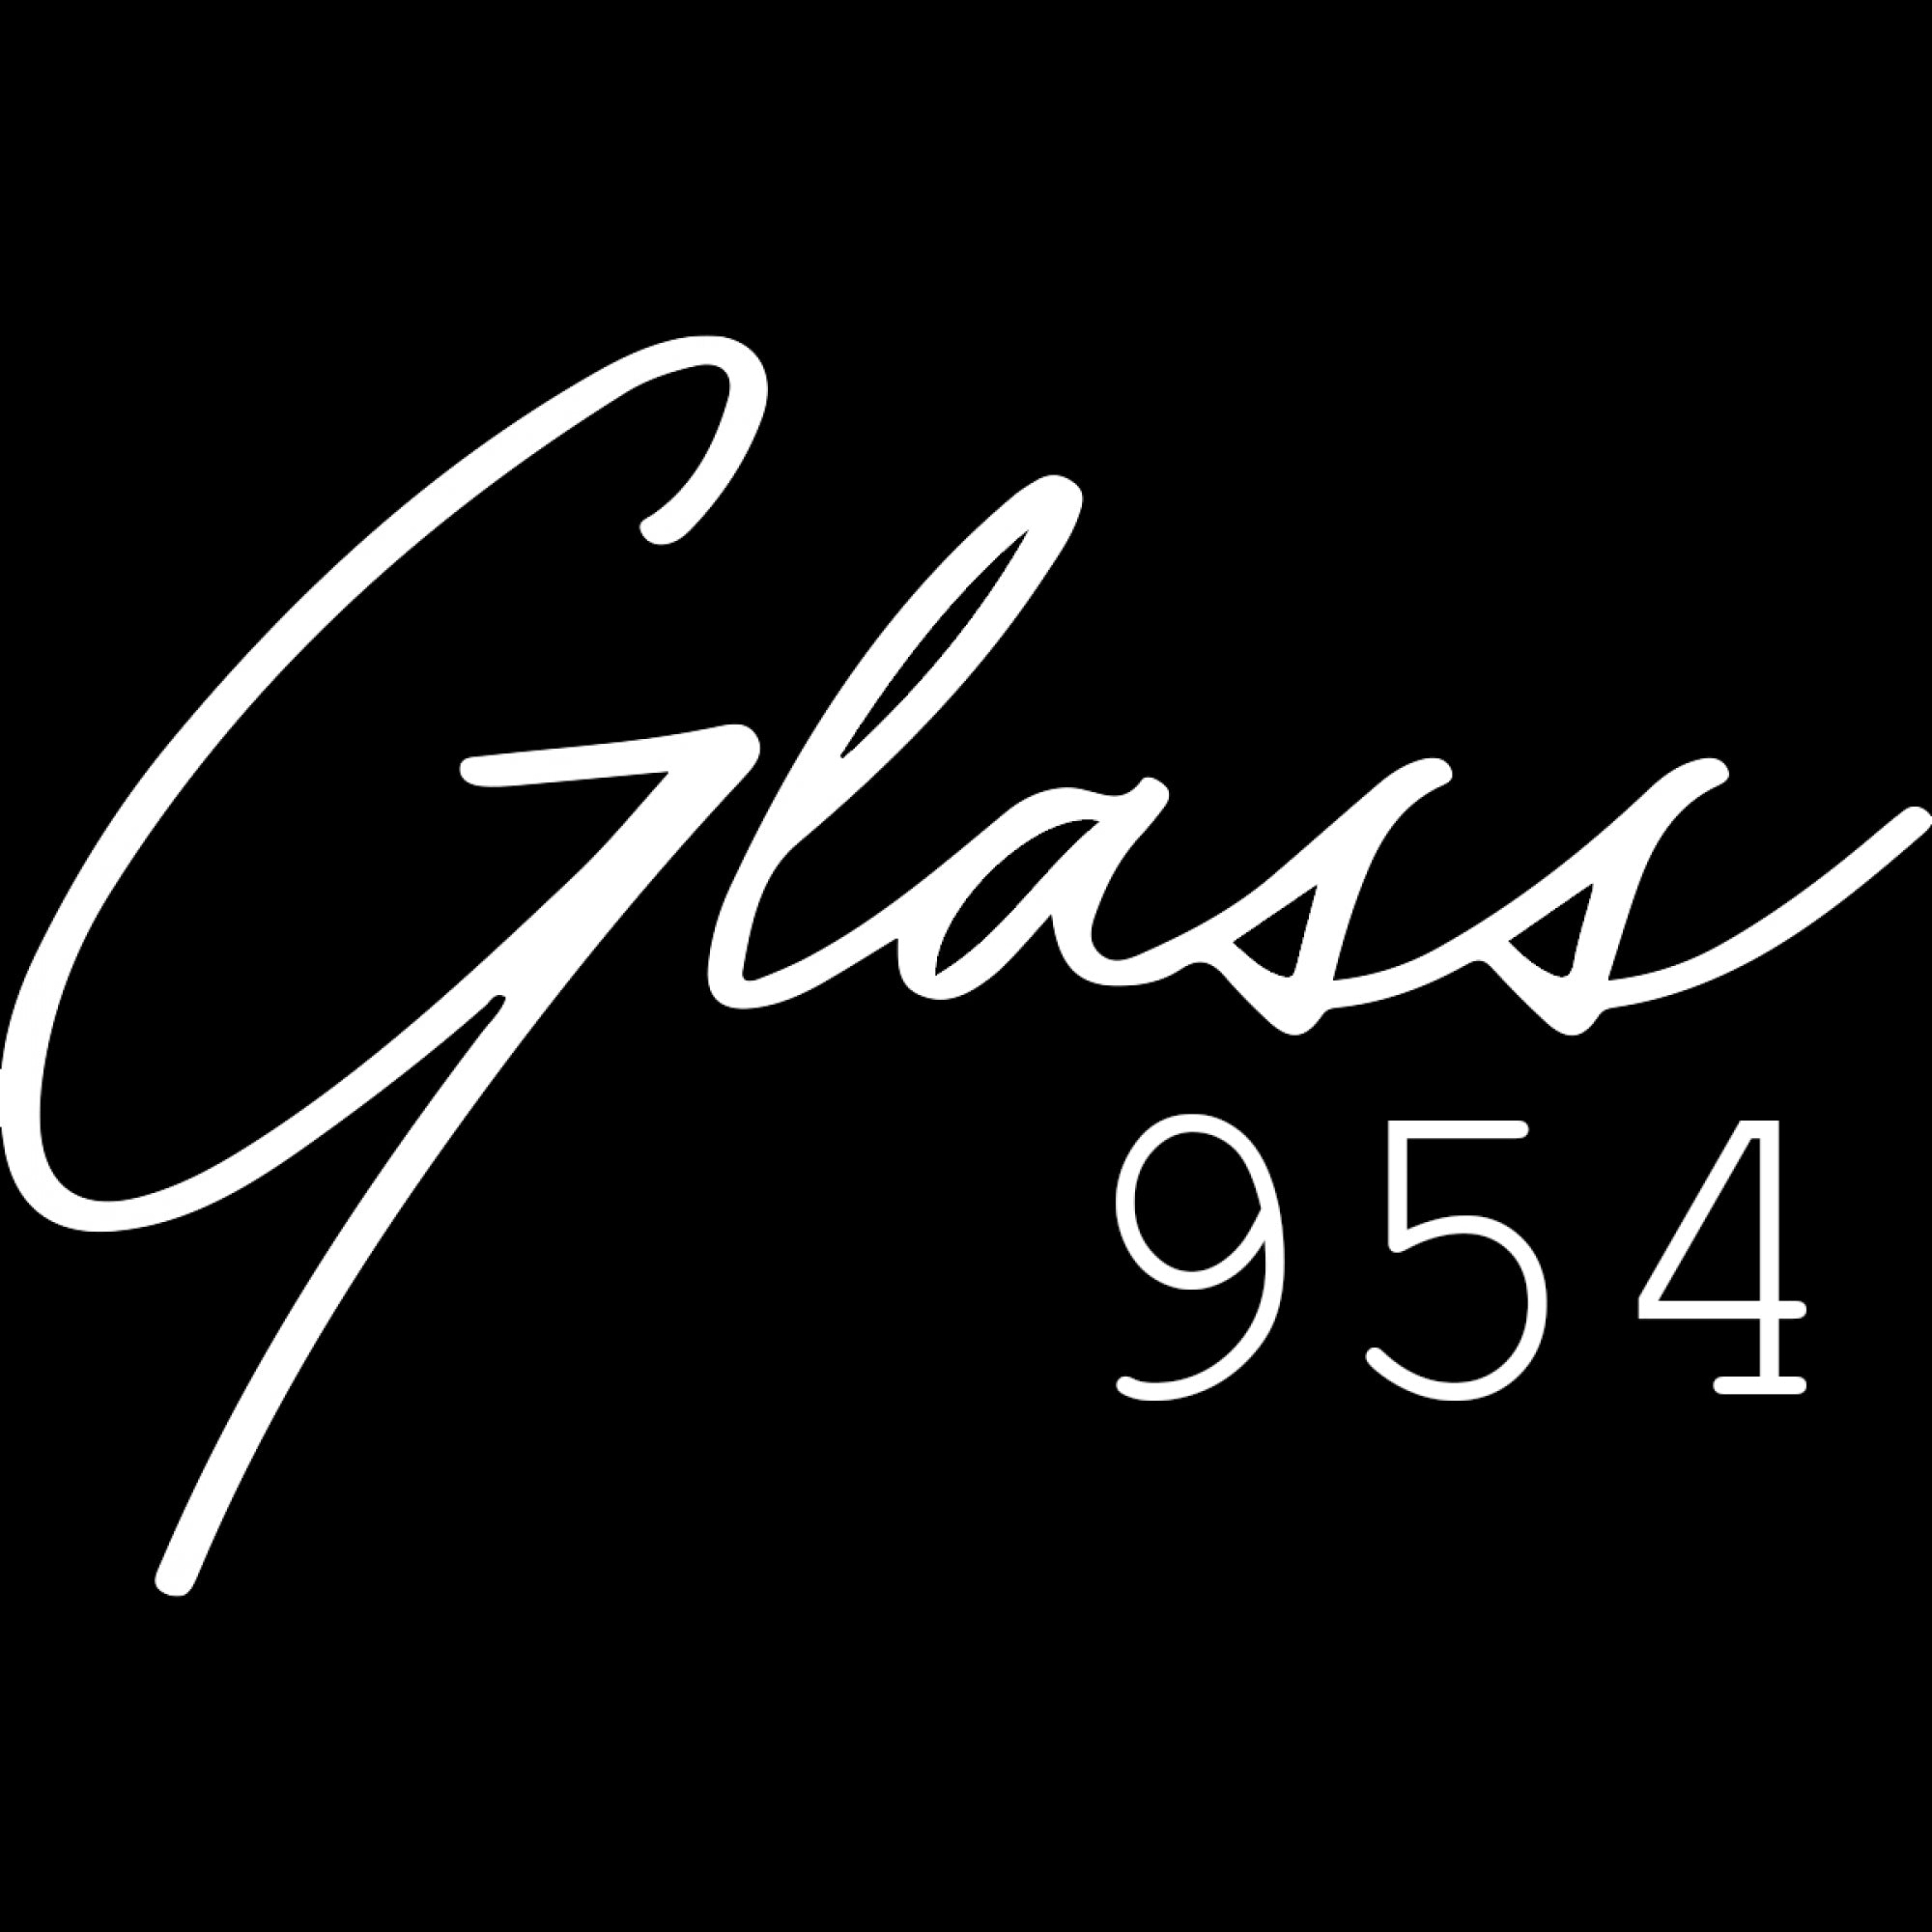 6mm Opal Terp Pearls – Glass954